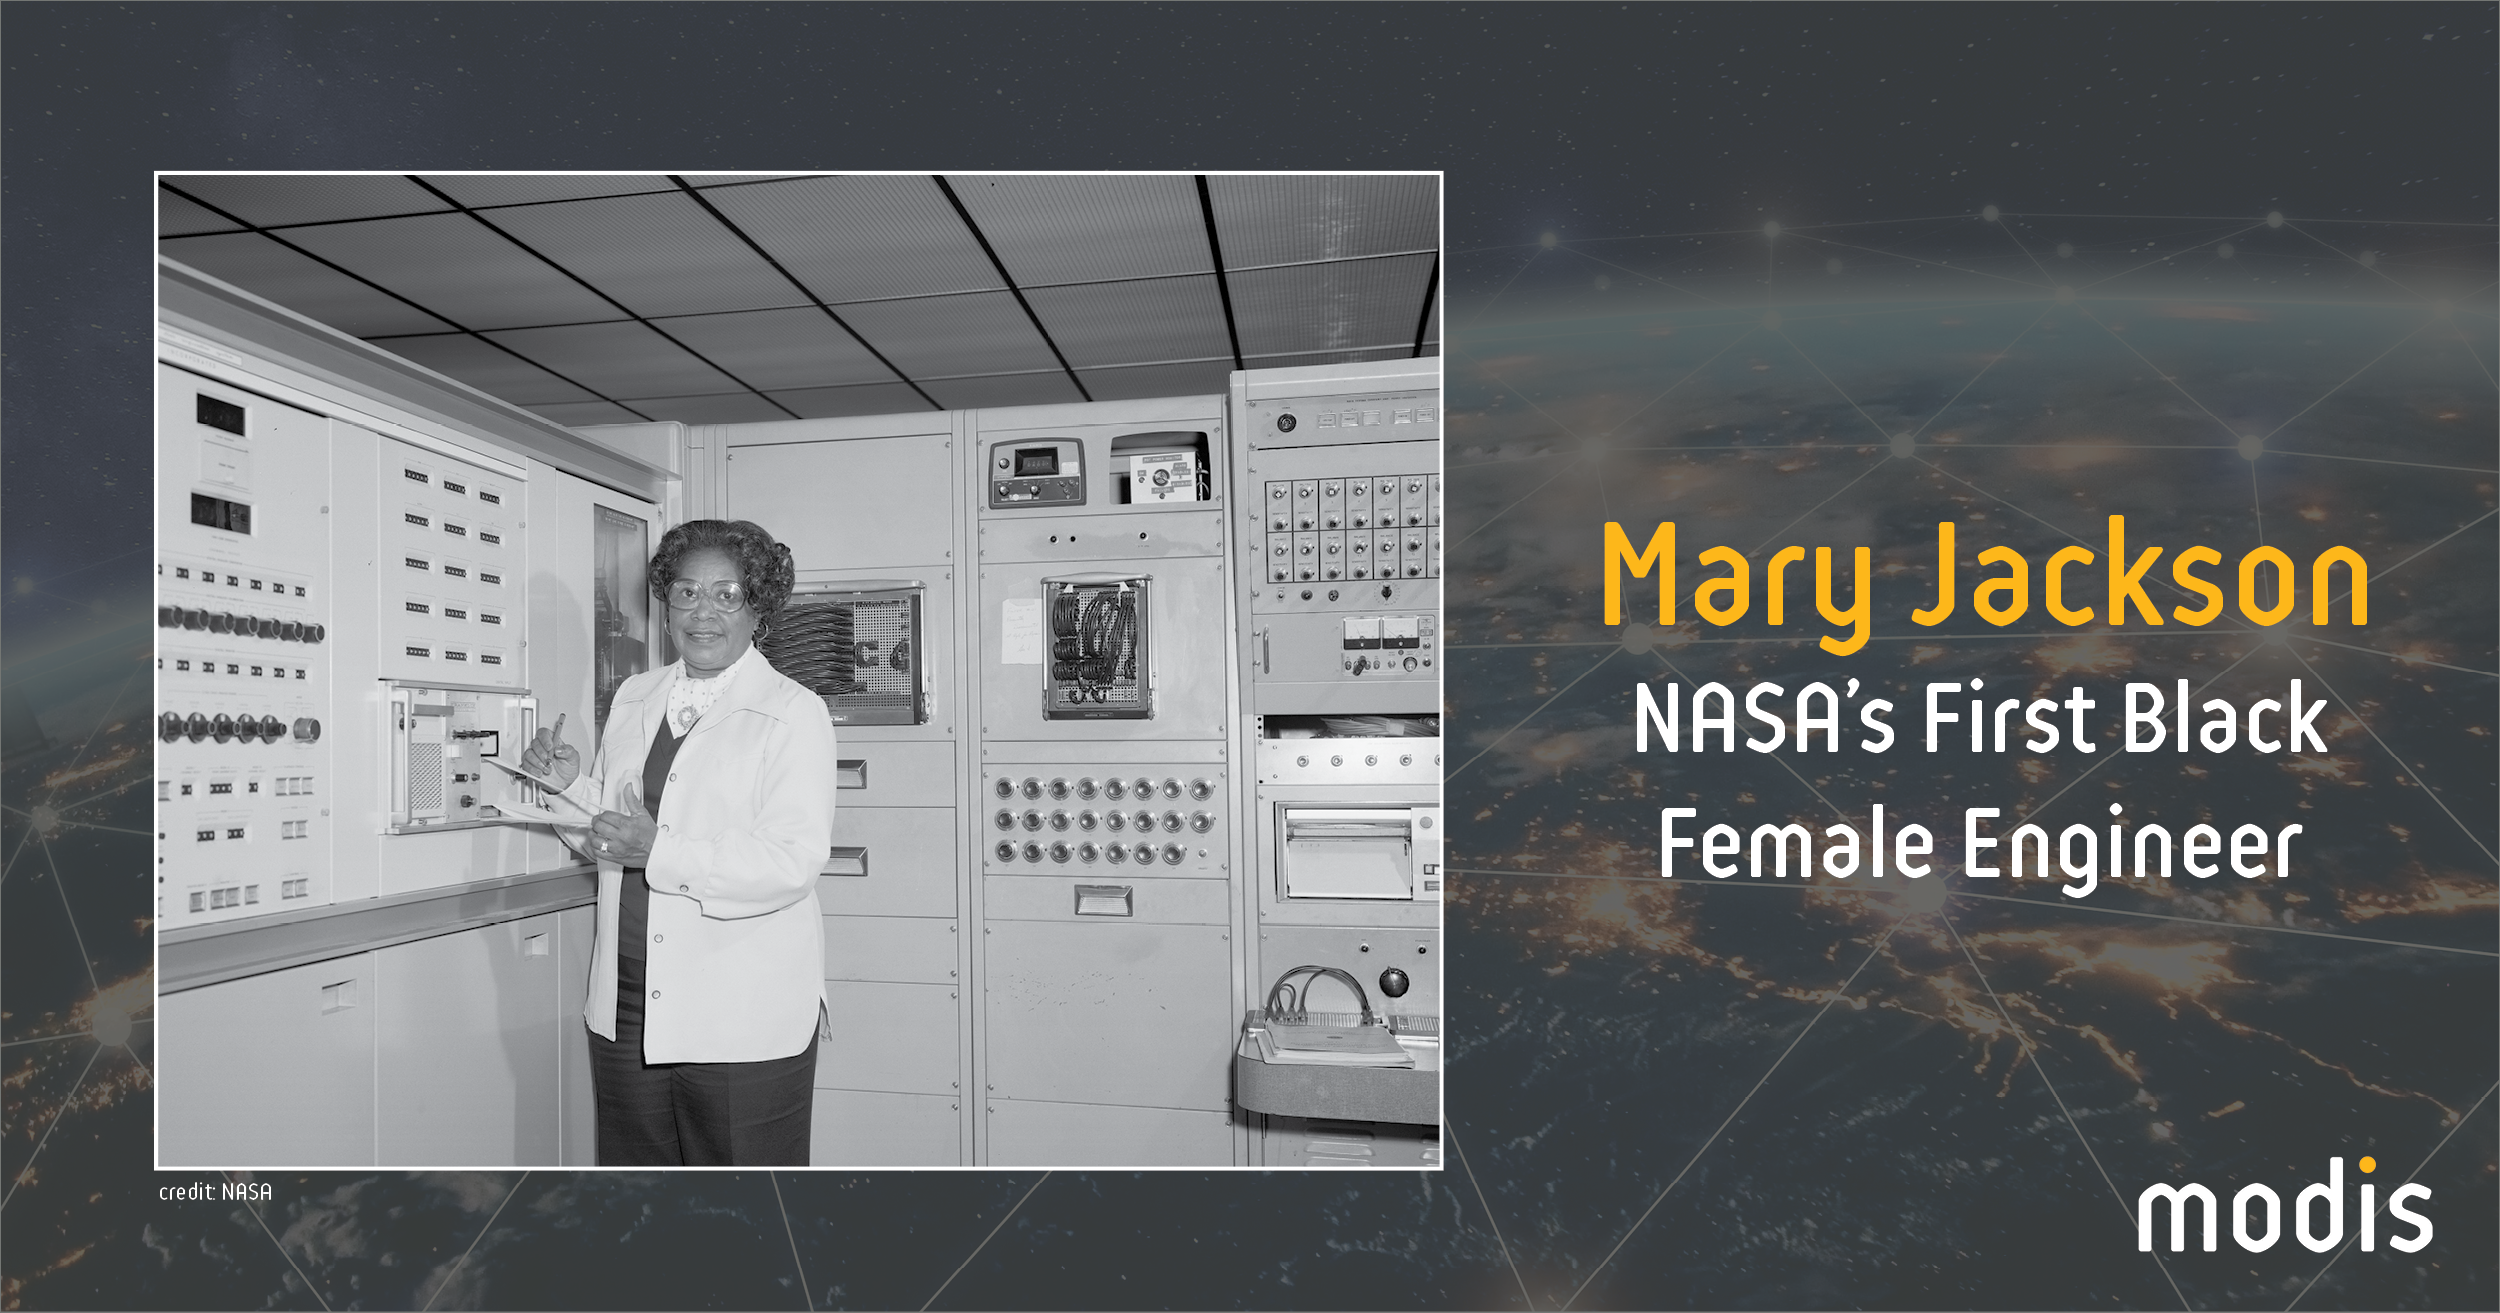 Mary Jackson NASA's First Black Female Engineer